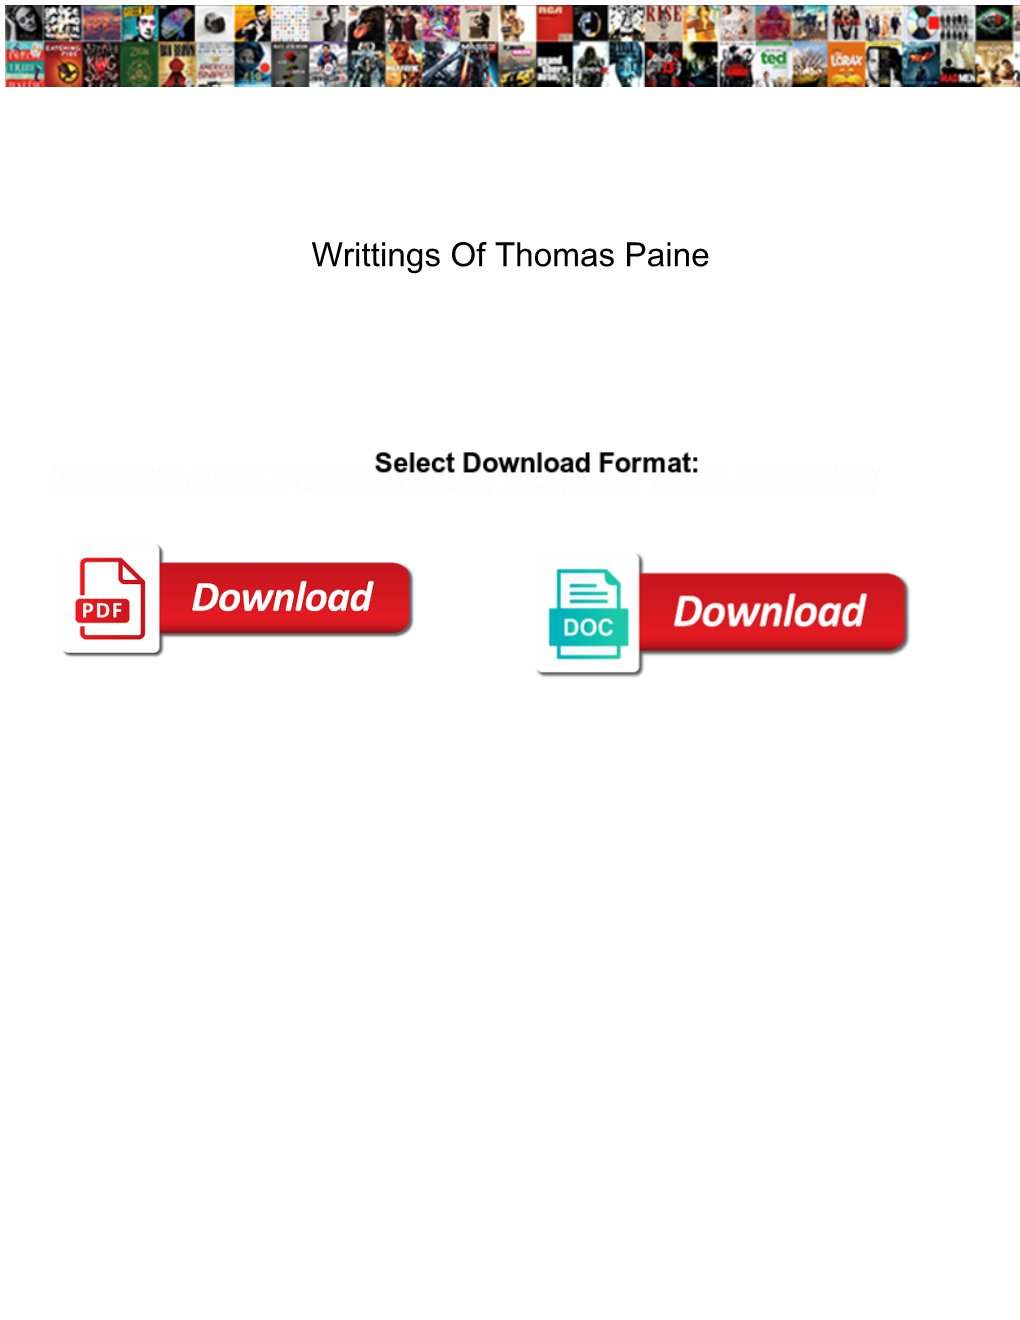 Writtings of Thomas Paine